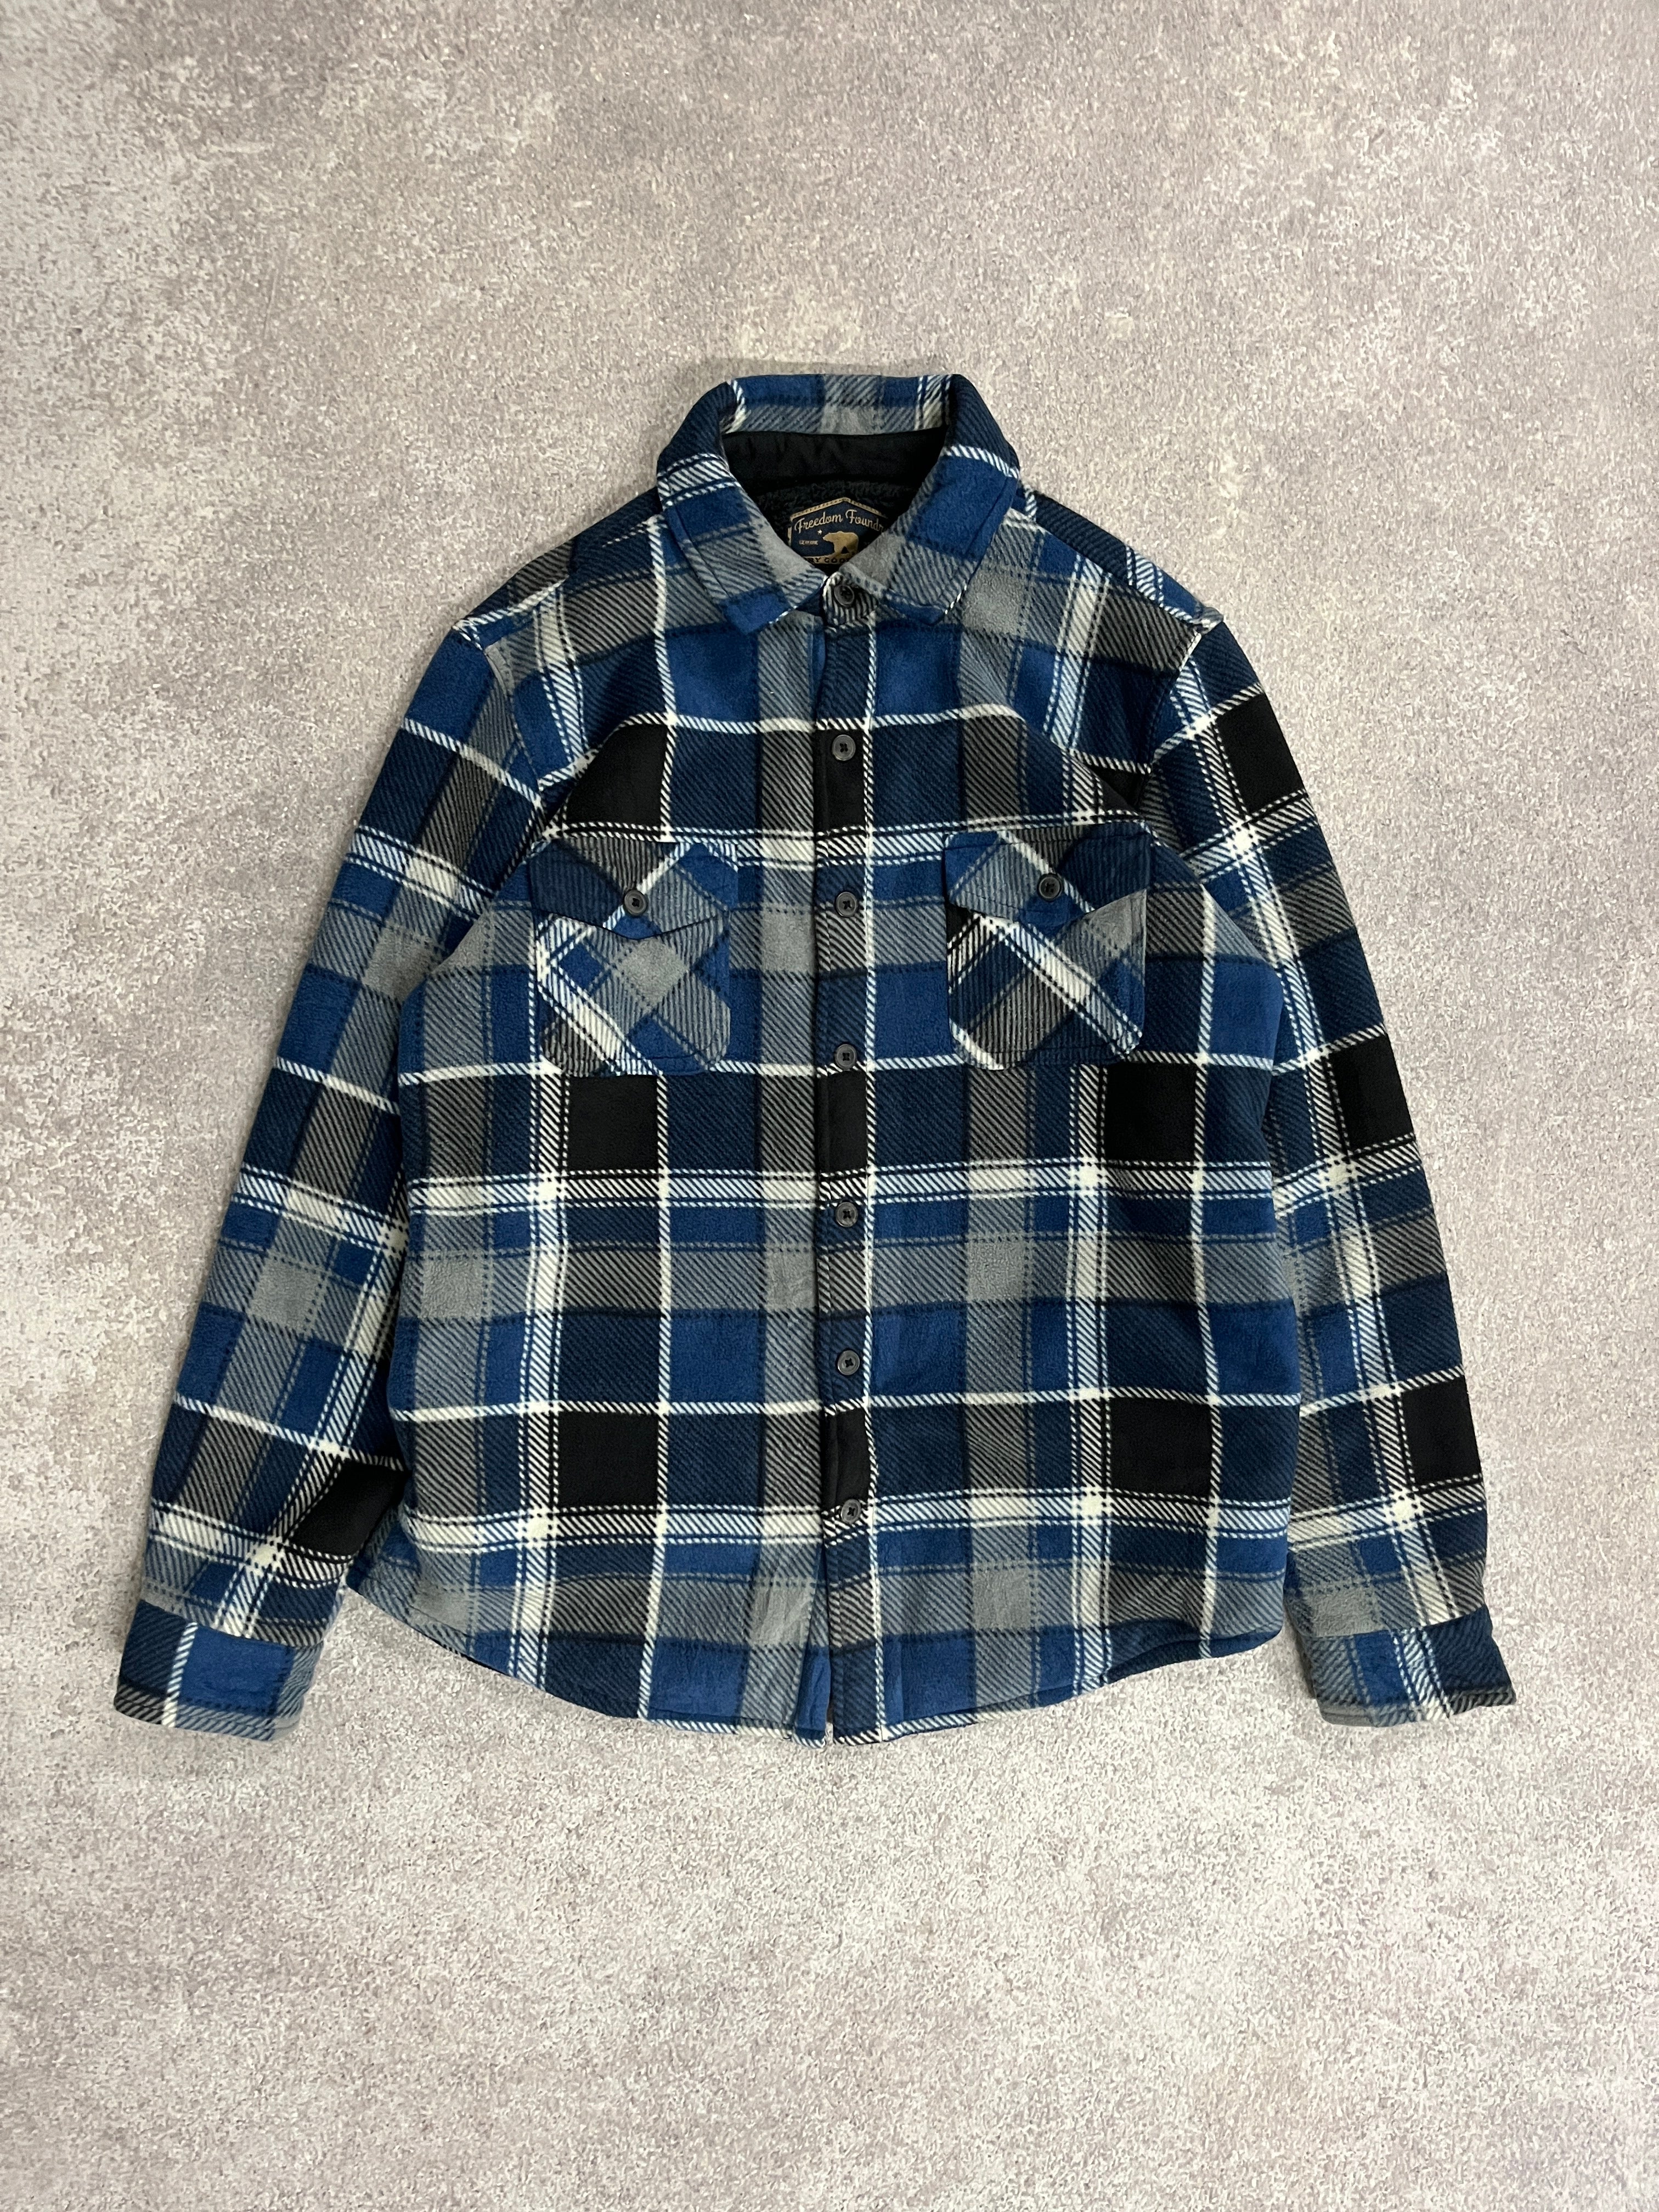 Vintage Lined Fleece Shirt Blue // Medium - RHAGHOUSE VINTAGE